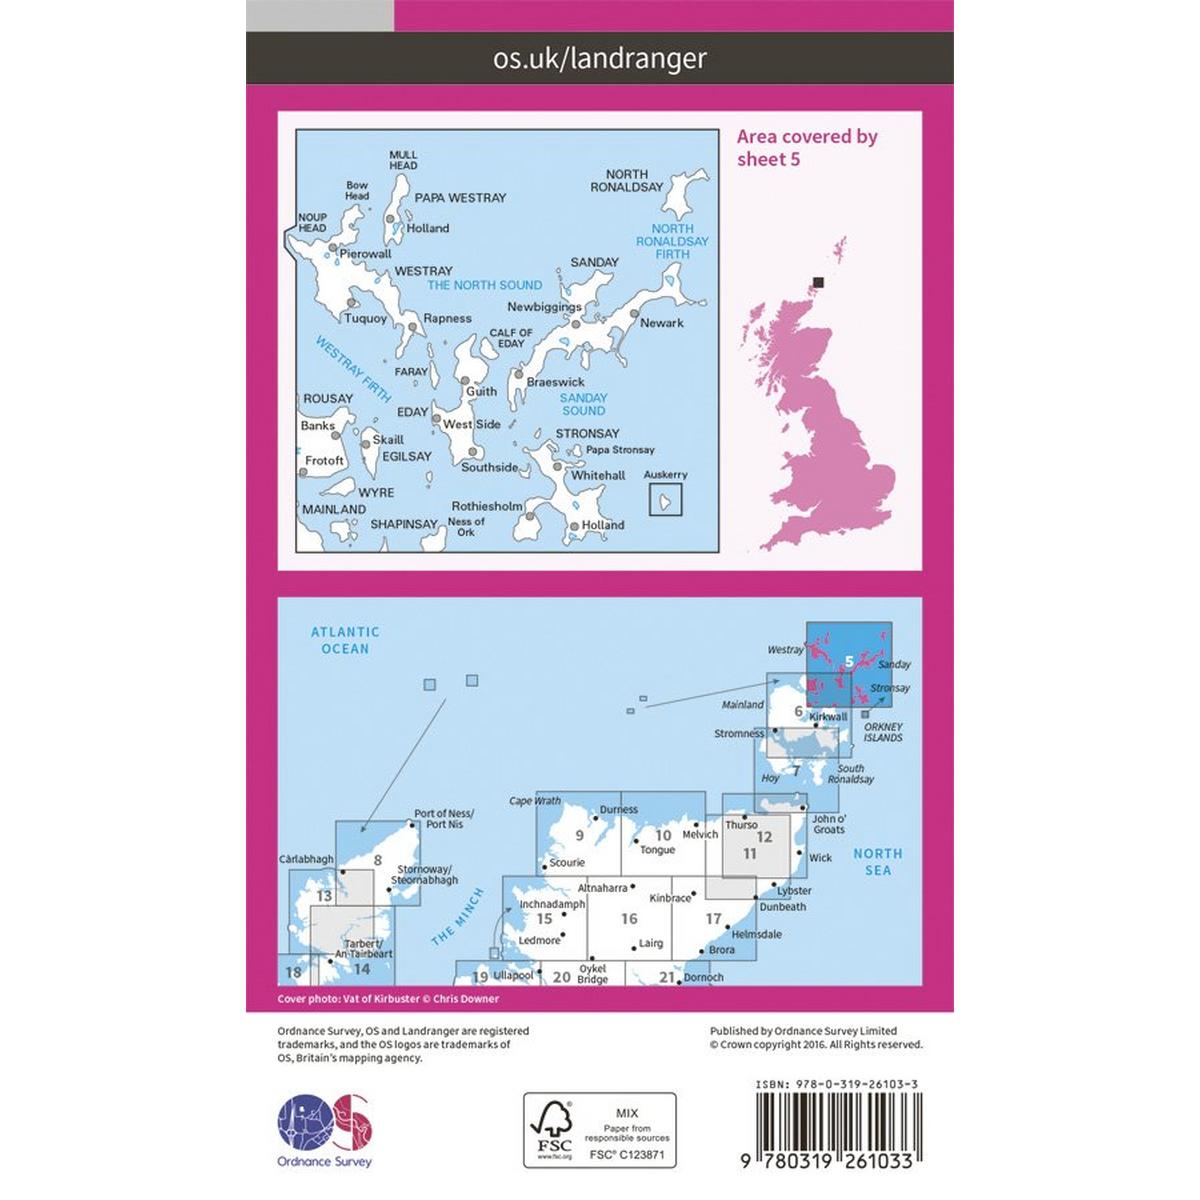 Ordnance Survey OS Landranger Map 05 Orkney - Northern Isles